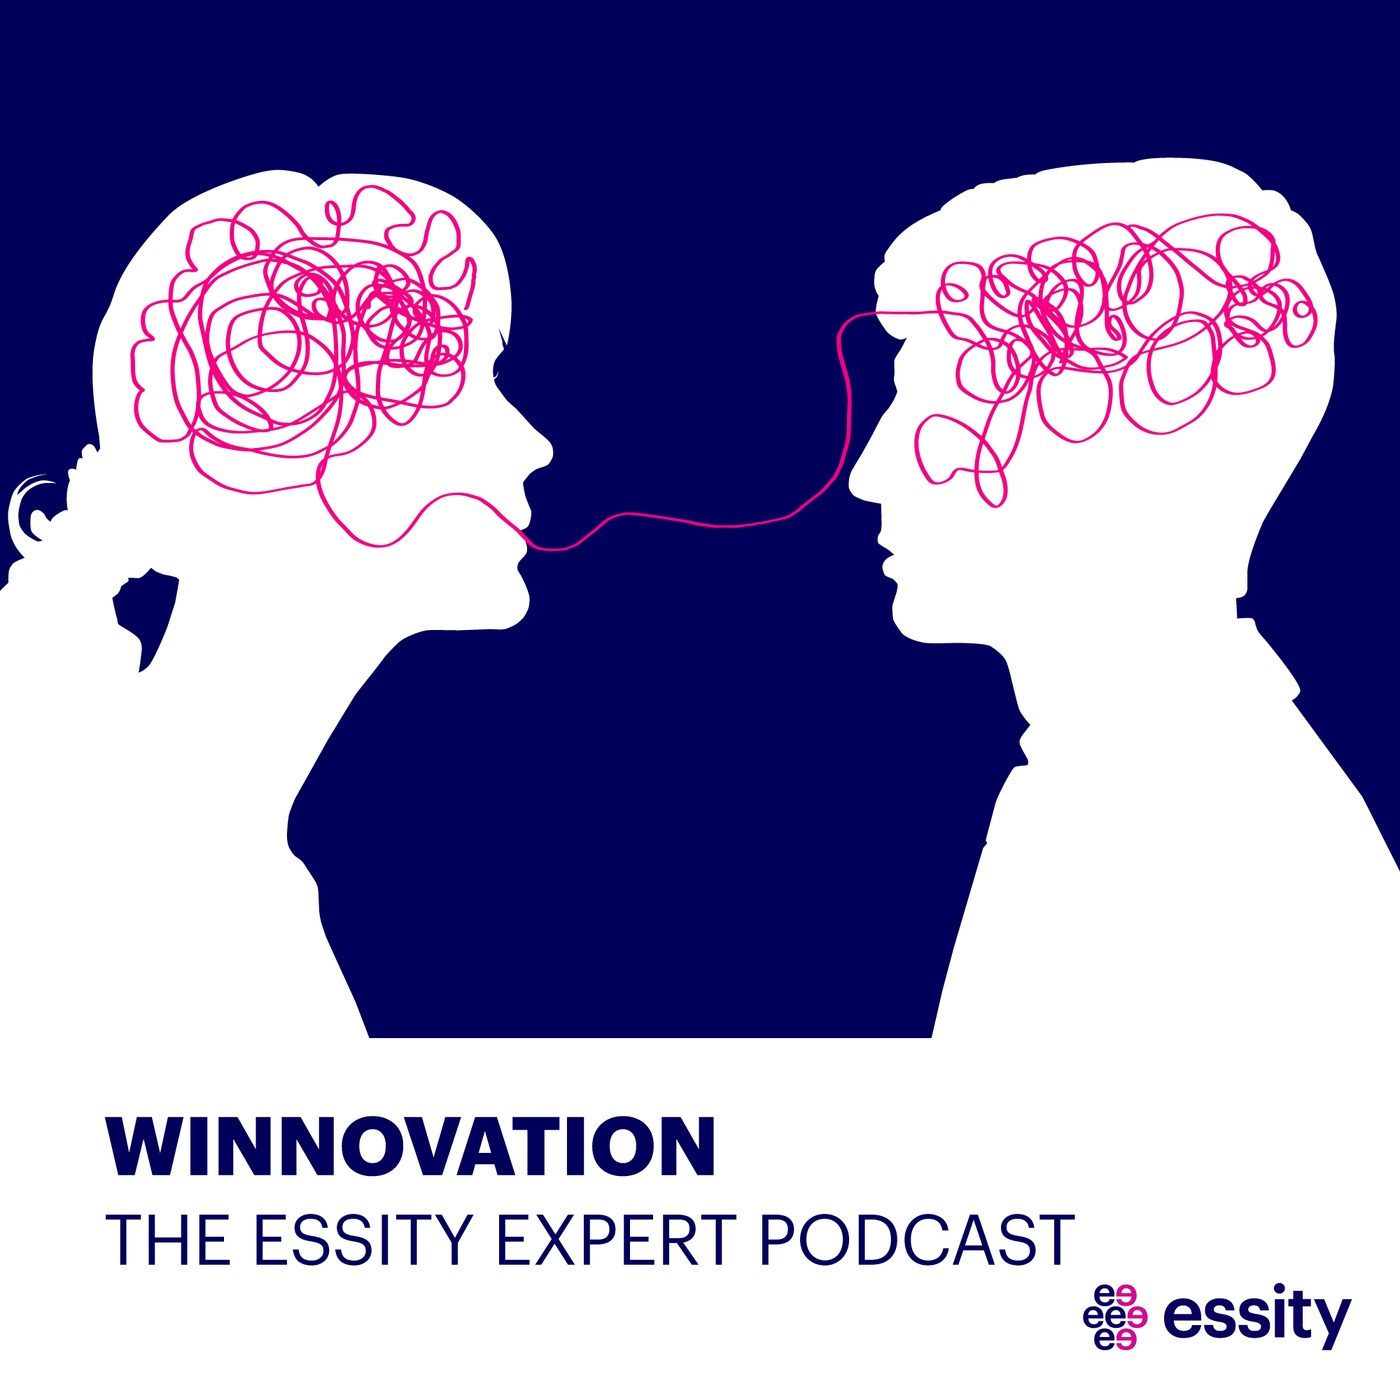 WINNOVATION - The Essity Expert Podcast